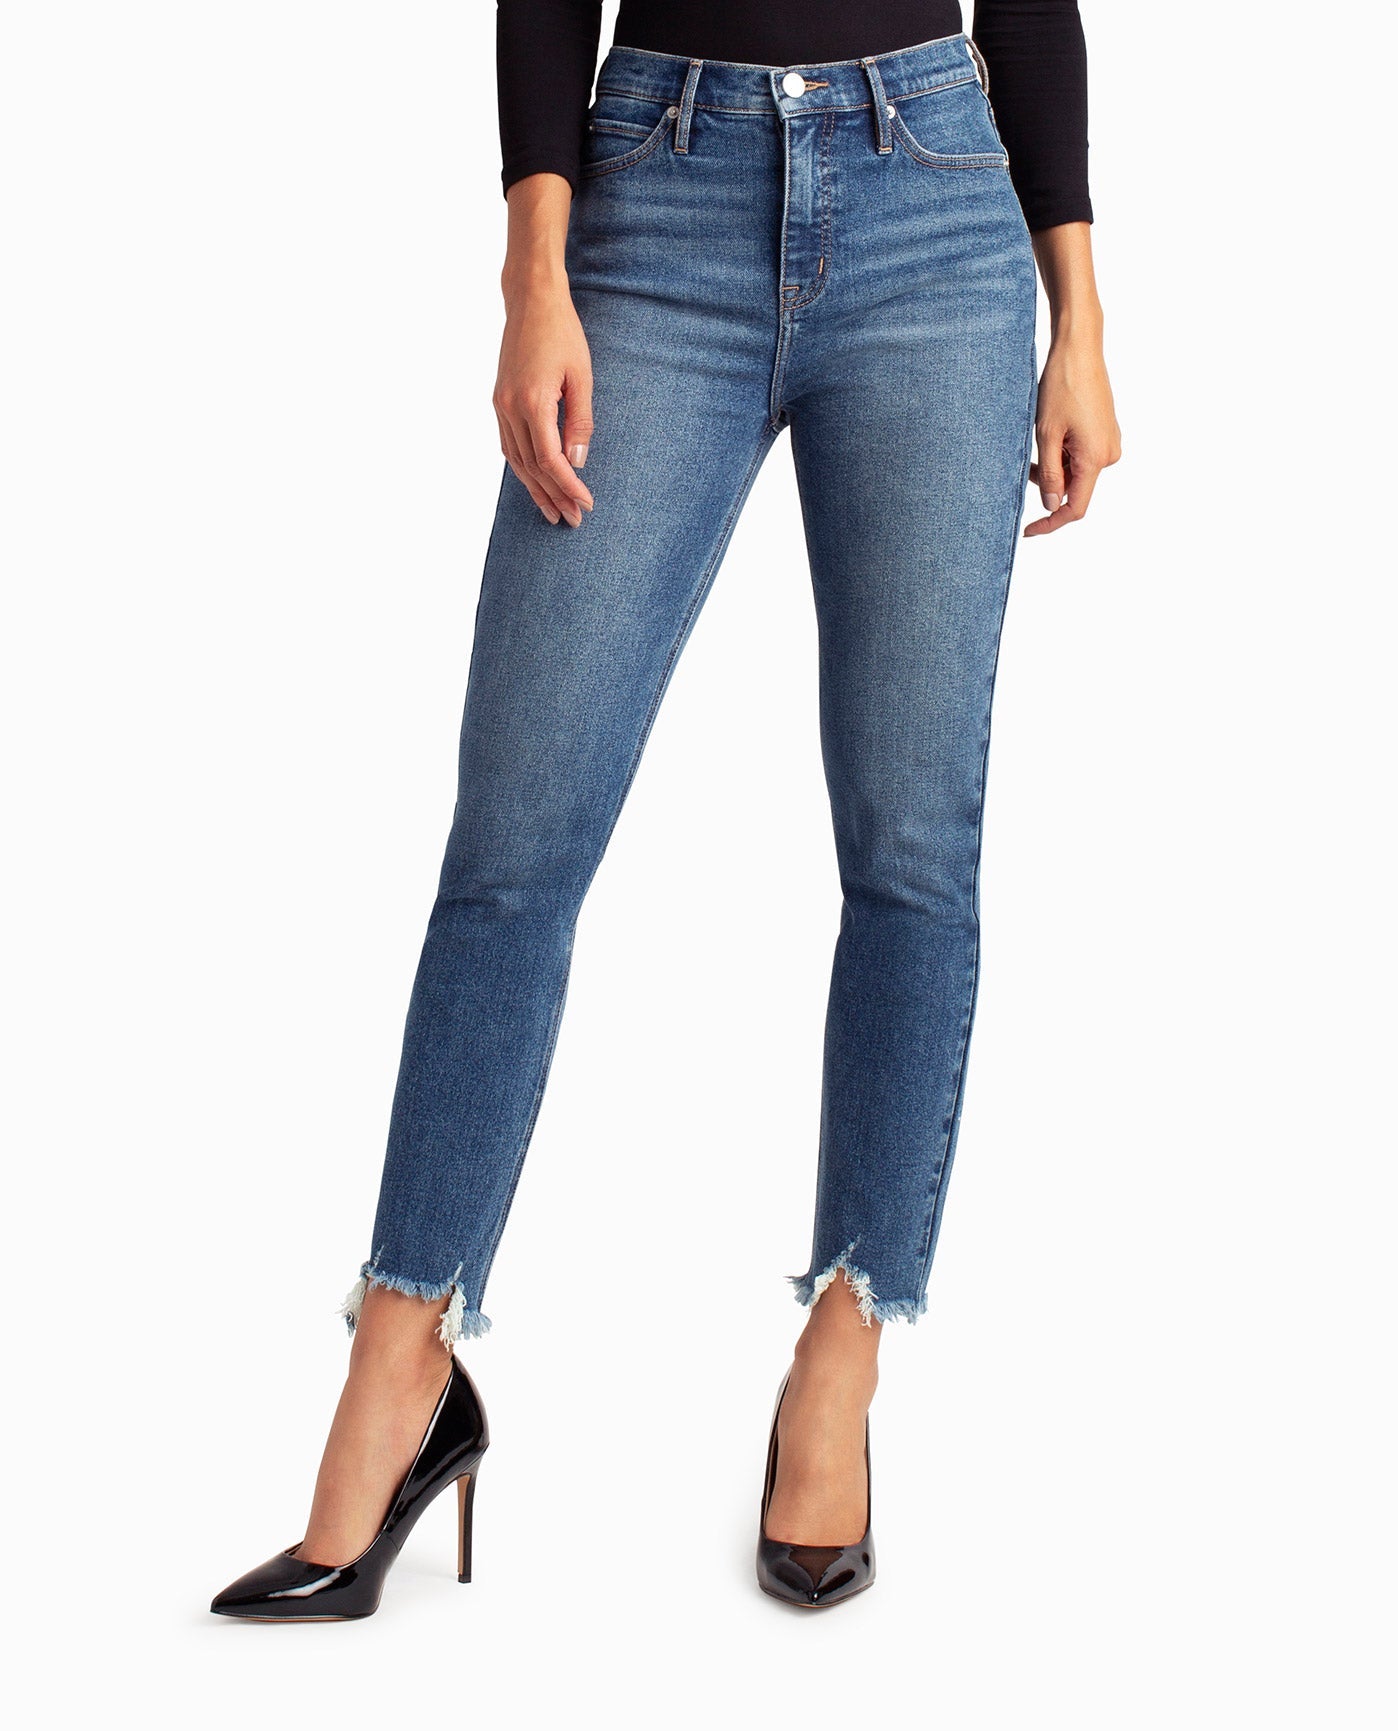 Skinny Fit Jeans with Frayed Hem